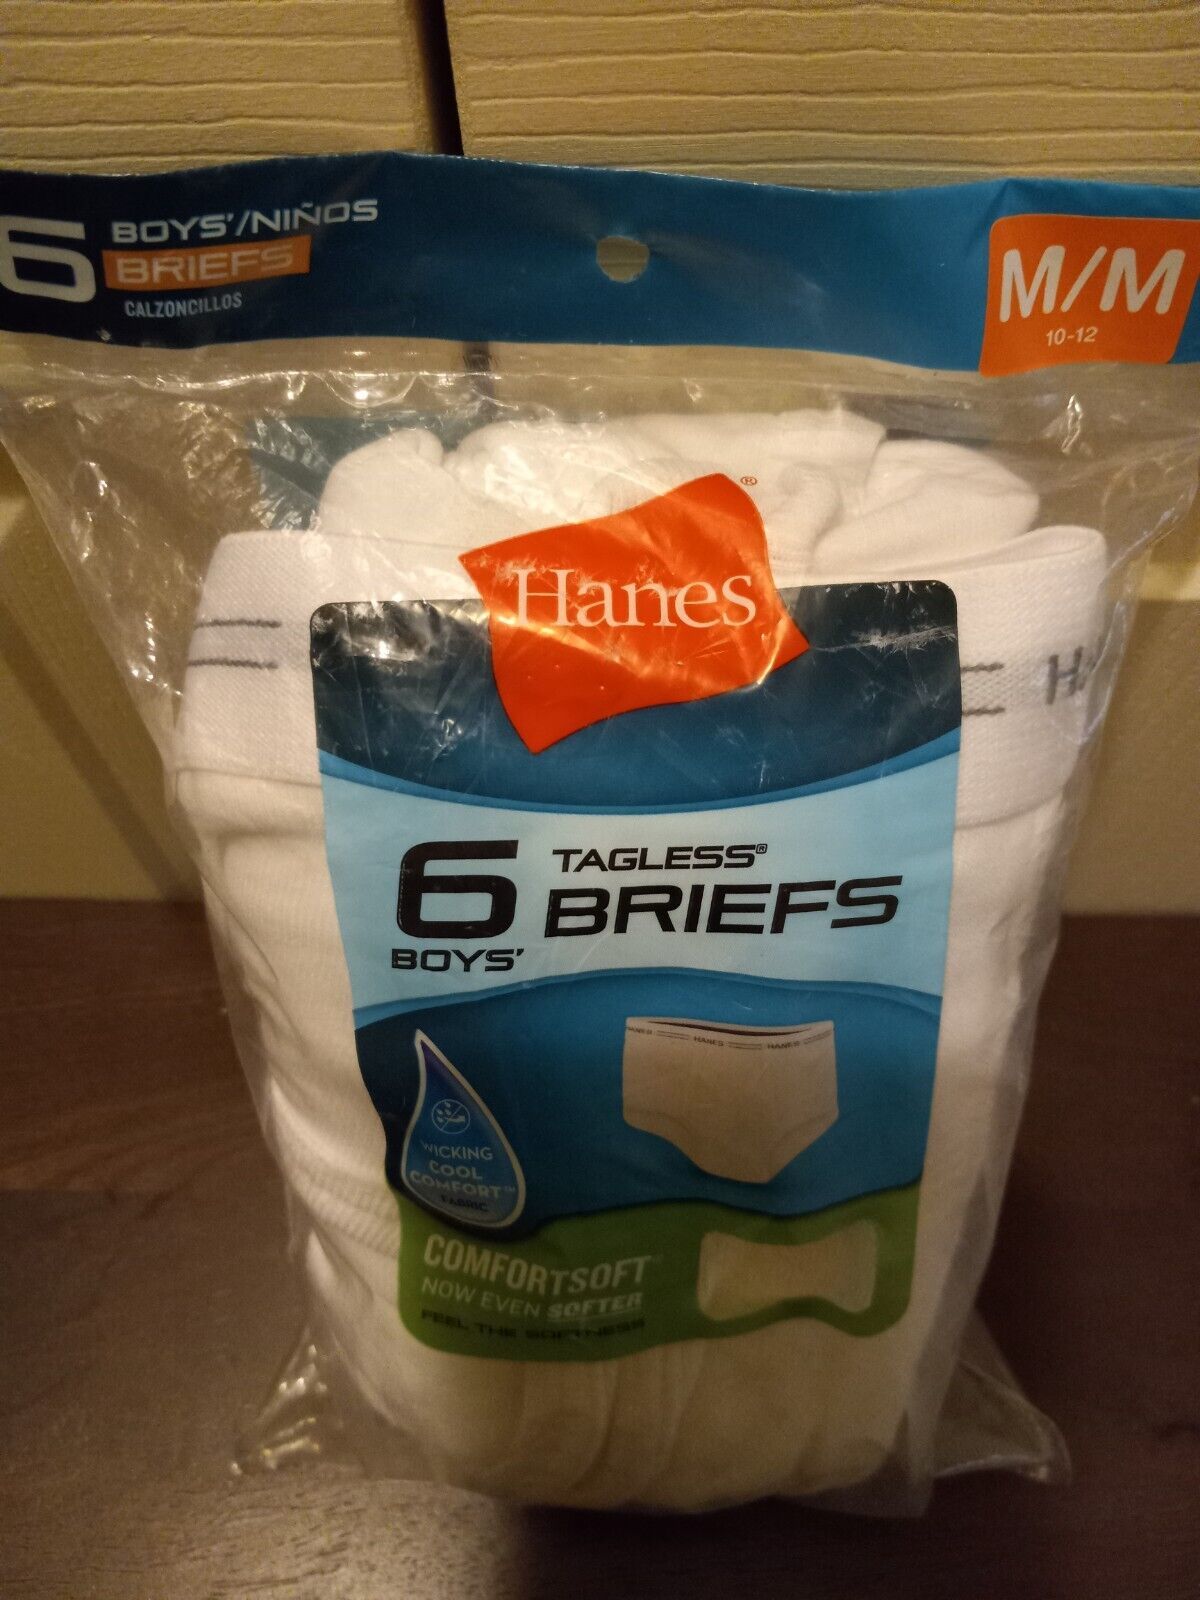 New Hanes Boys Size 10-12 White Briefs Tagless - $5.97